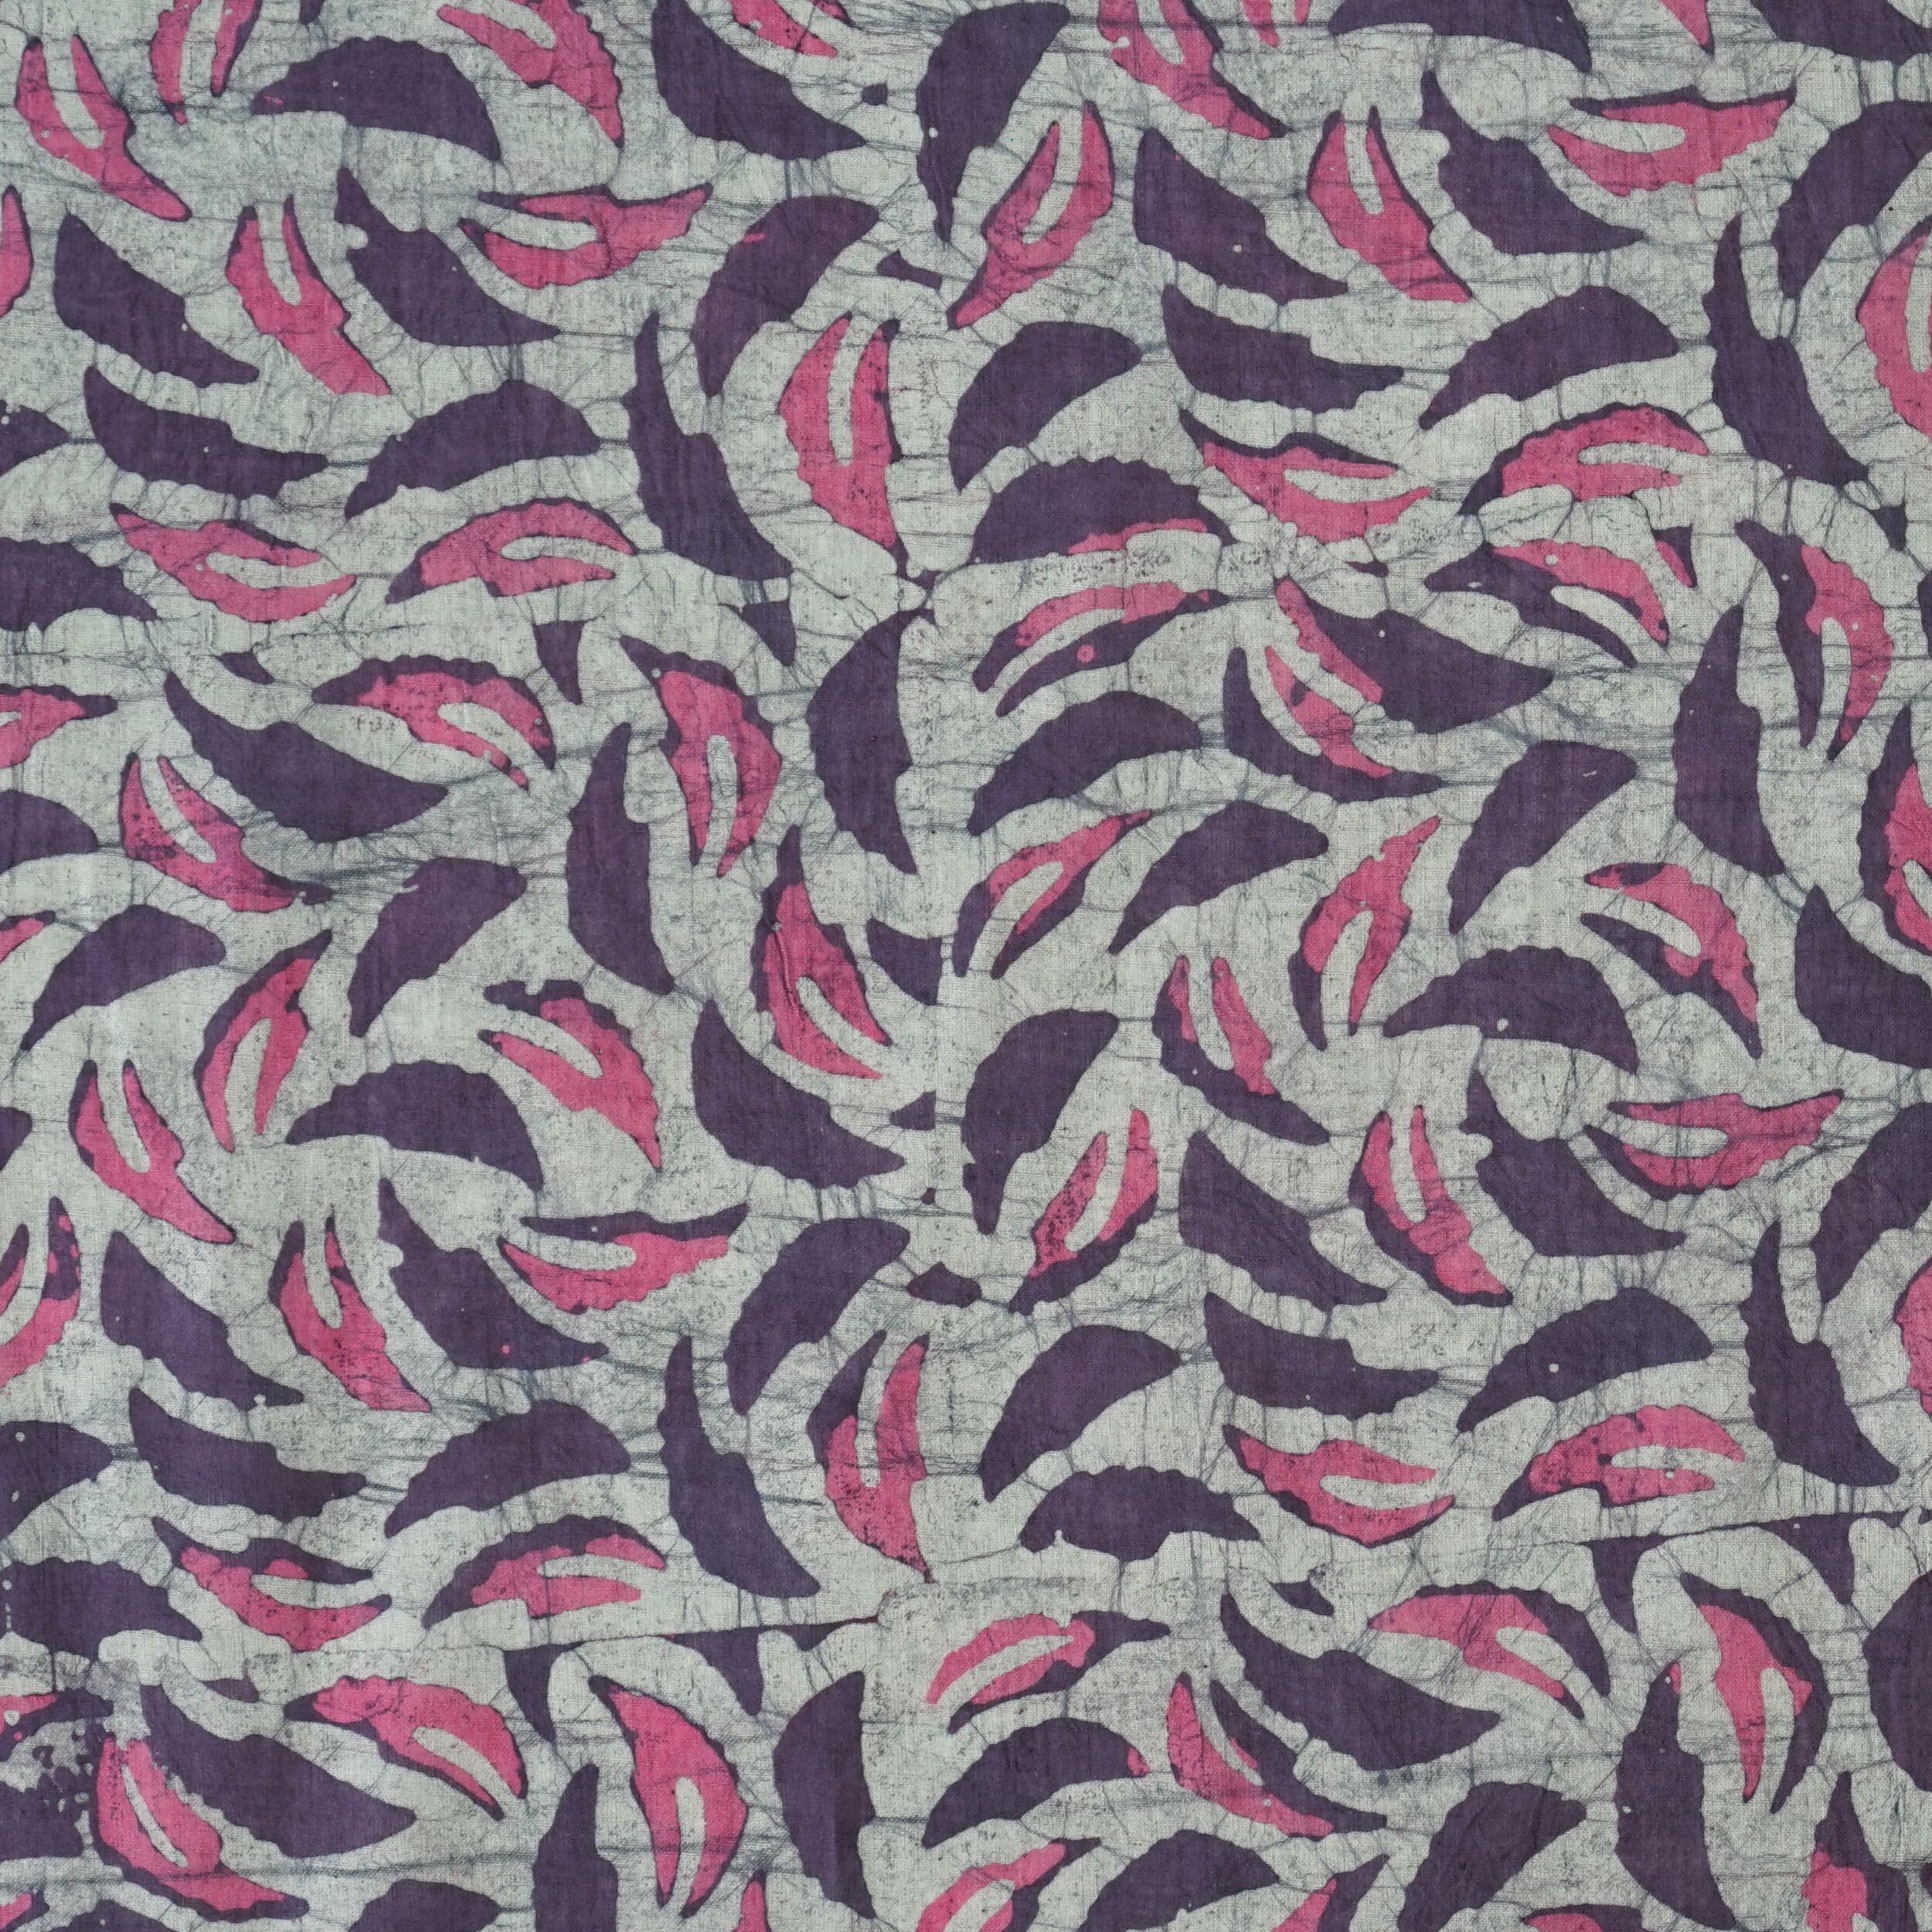 Block-Printed Batik Cotton Fabric From India - Autumnal Rustle Design - Flat